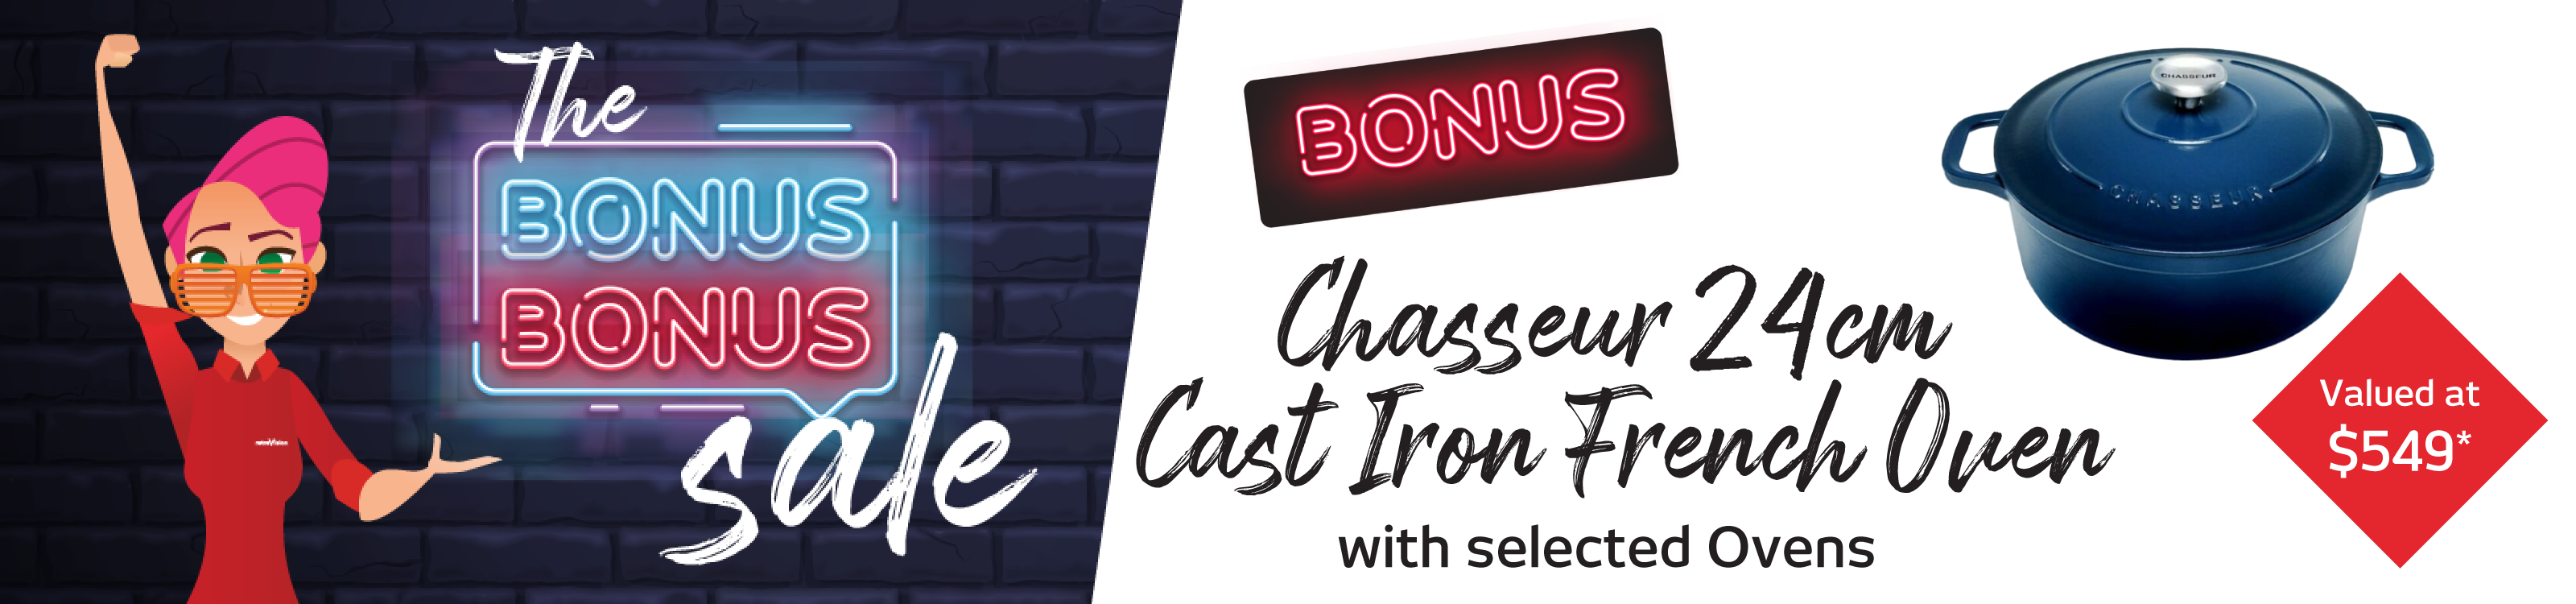 Bonus Chasseur 24cm Cast Iron French Oven at Retravision